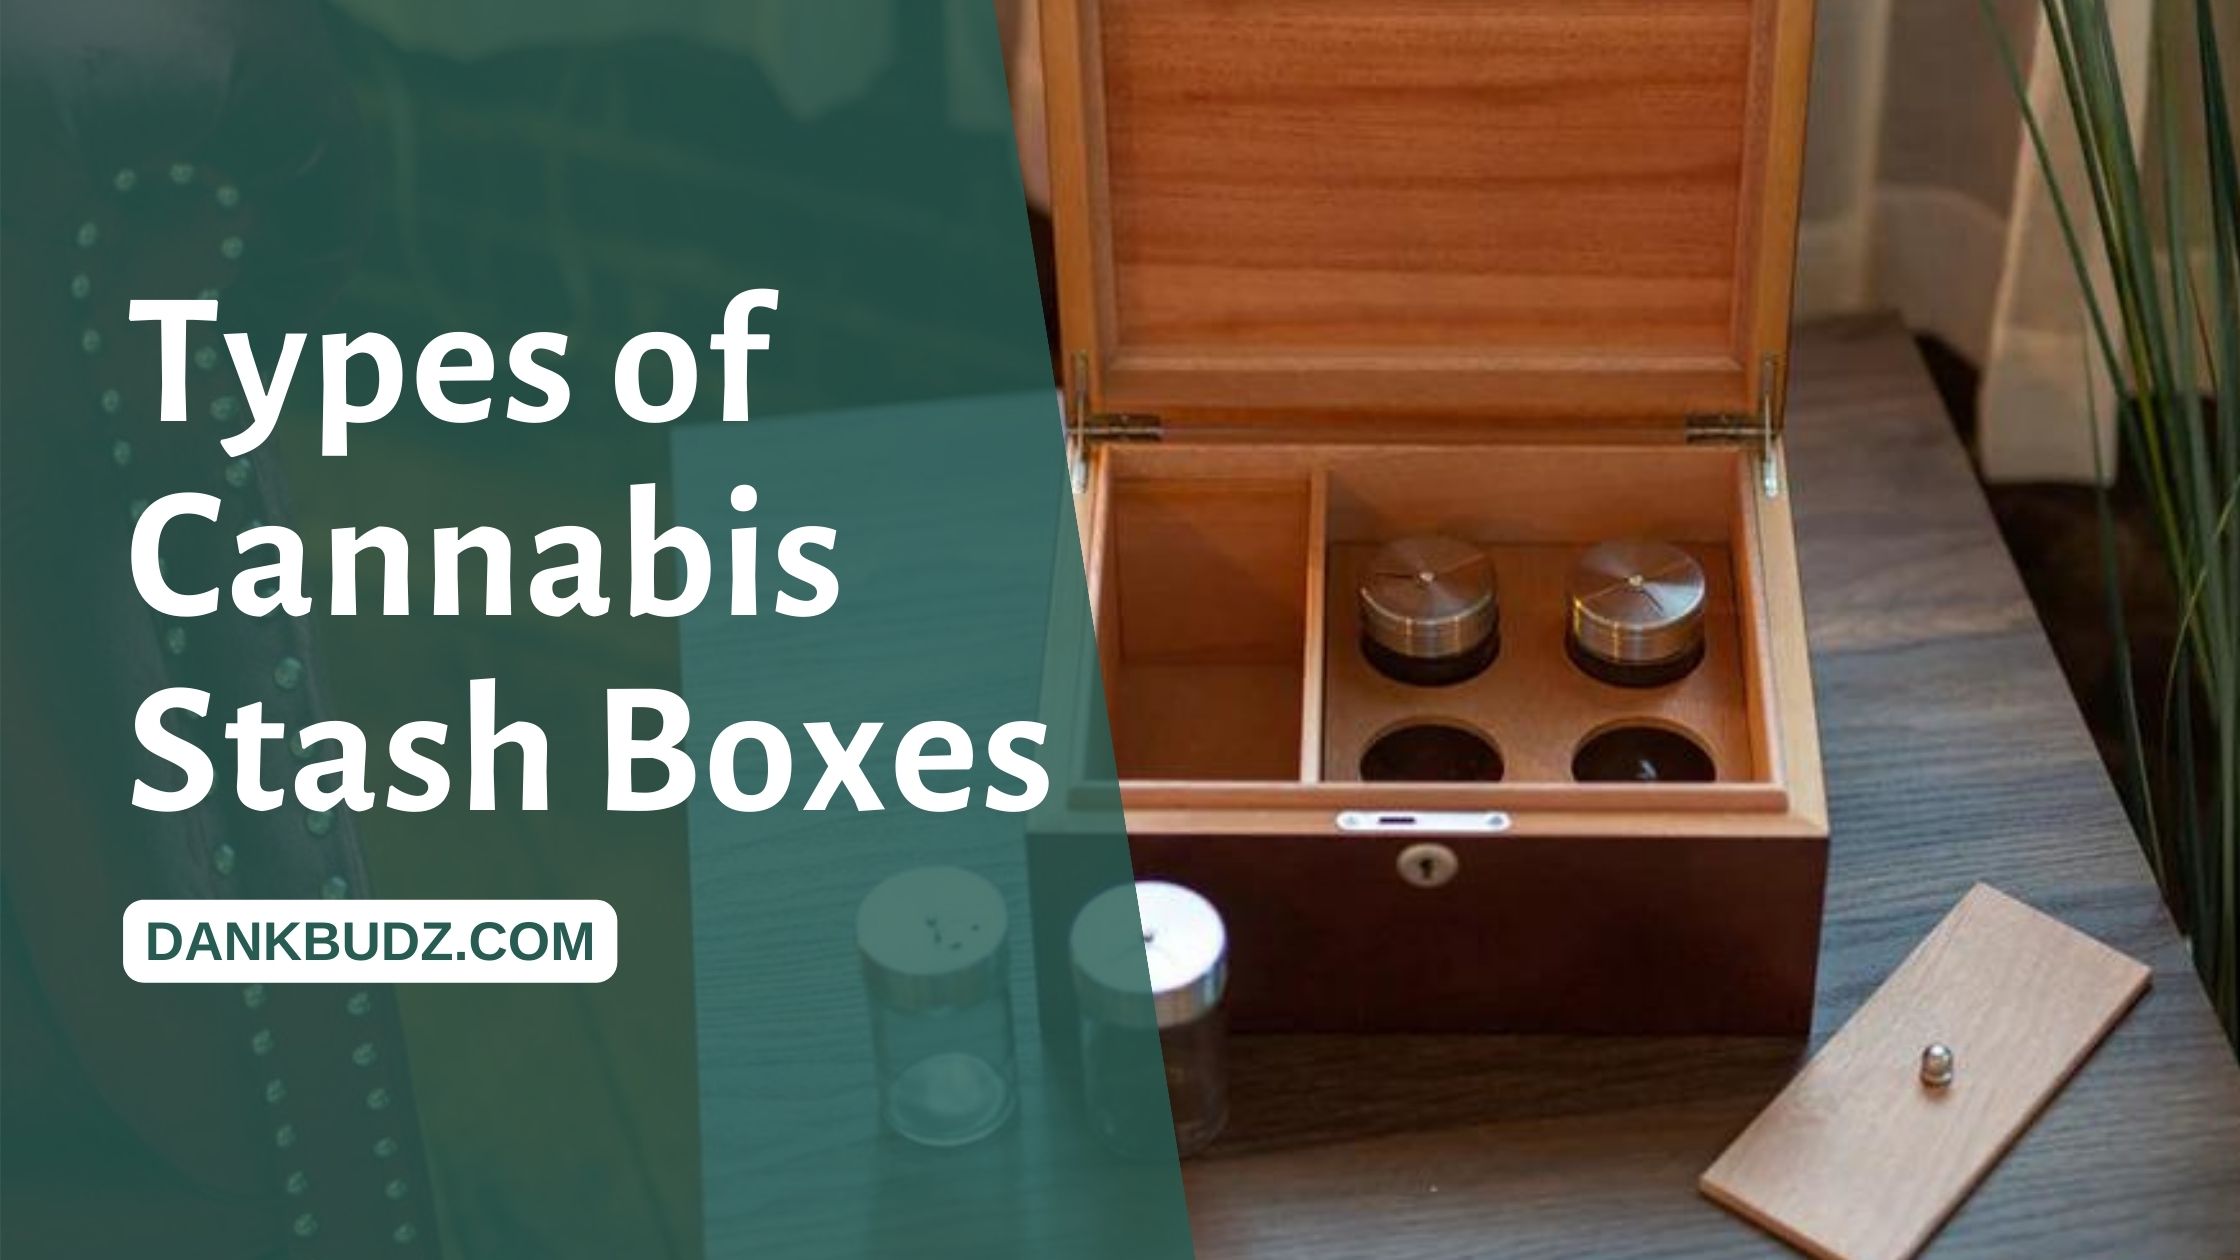 Types of Cannabis Stash Boxes